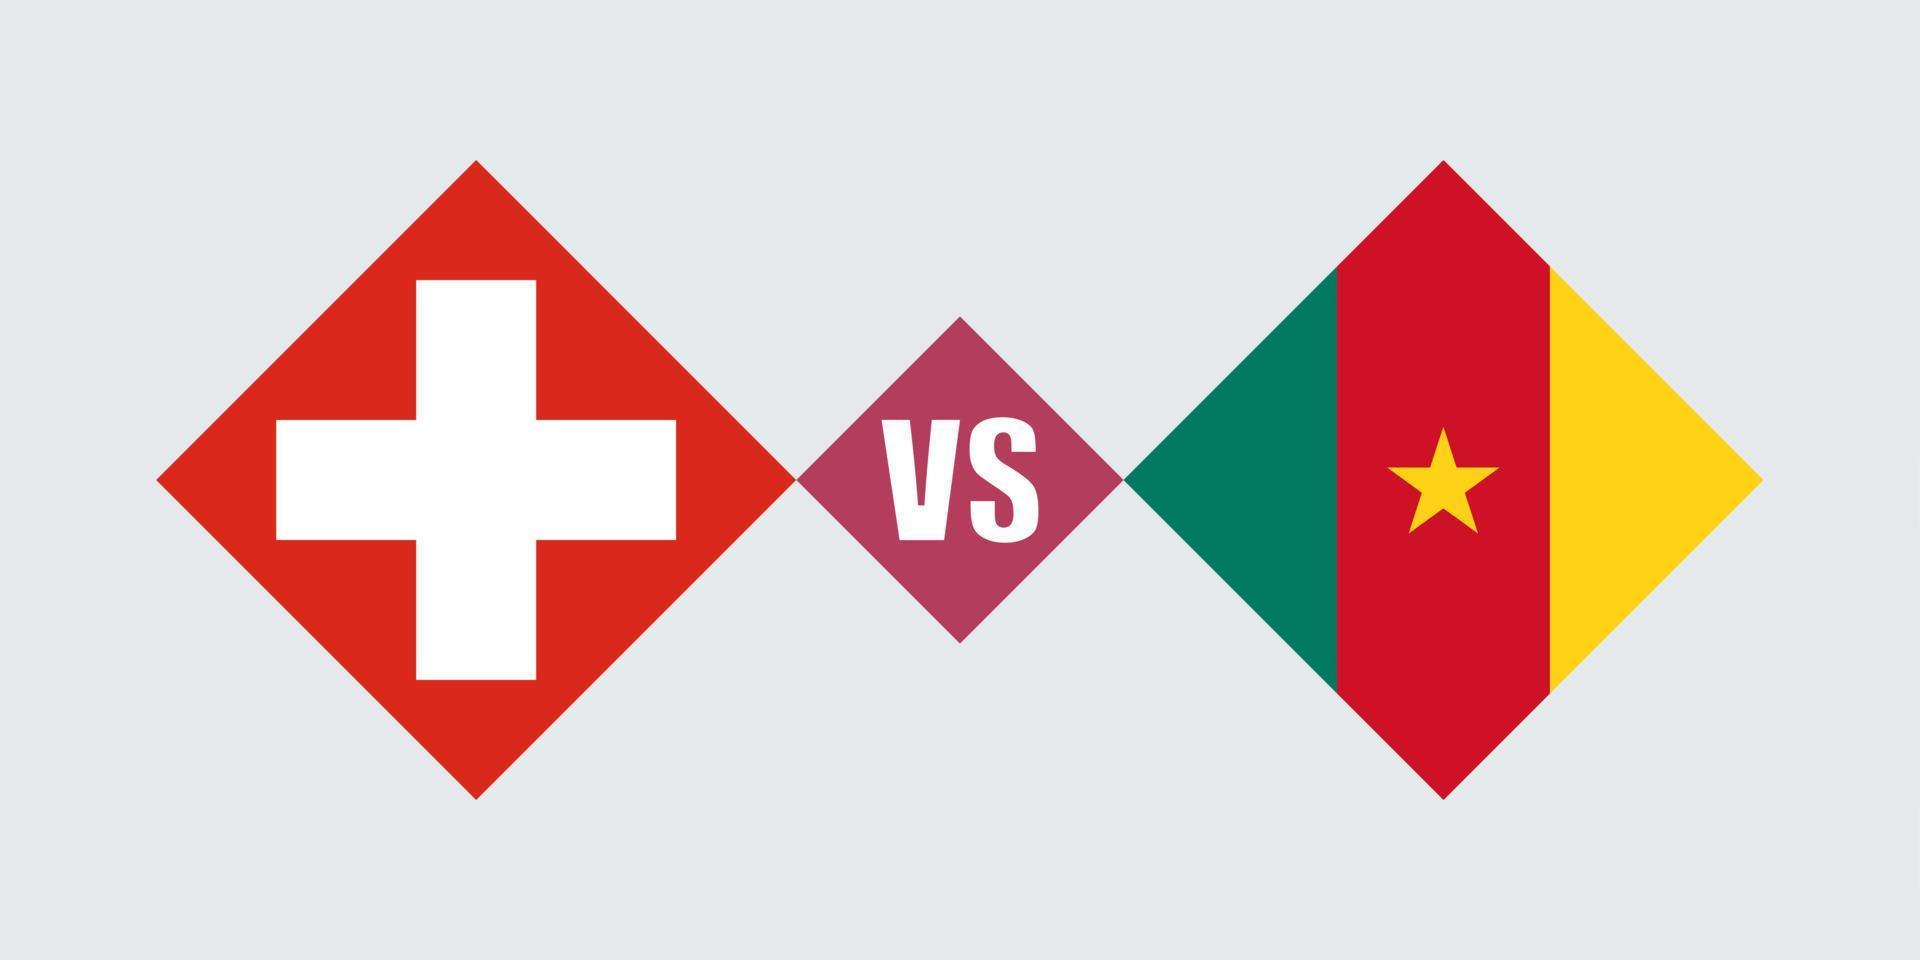 Switzerland vs Cameroon flag concept. Vector illustration.